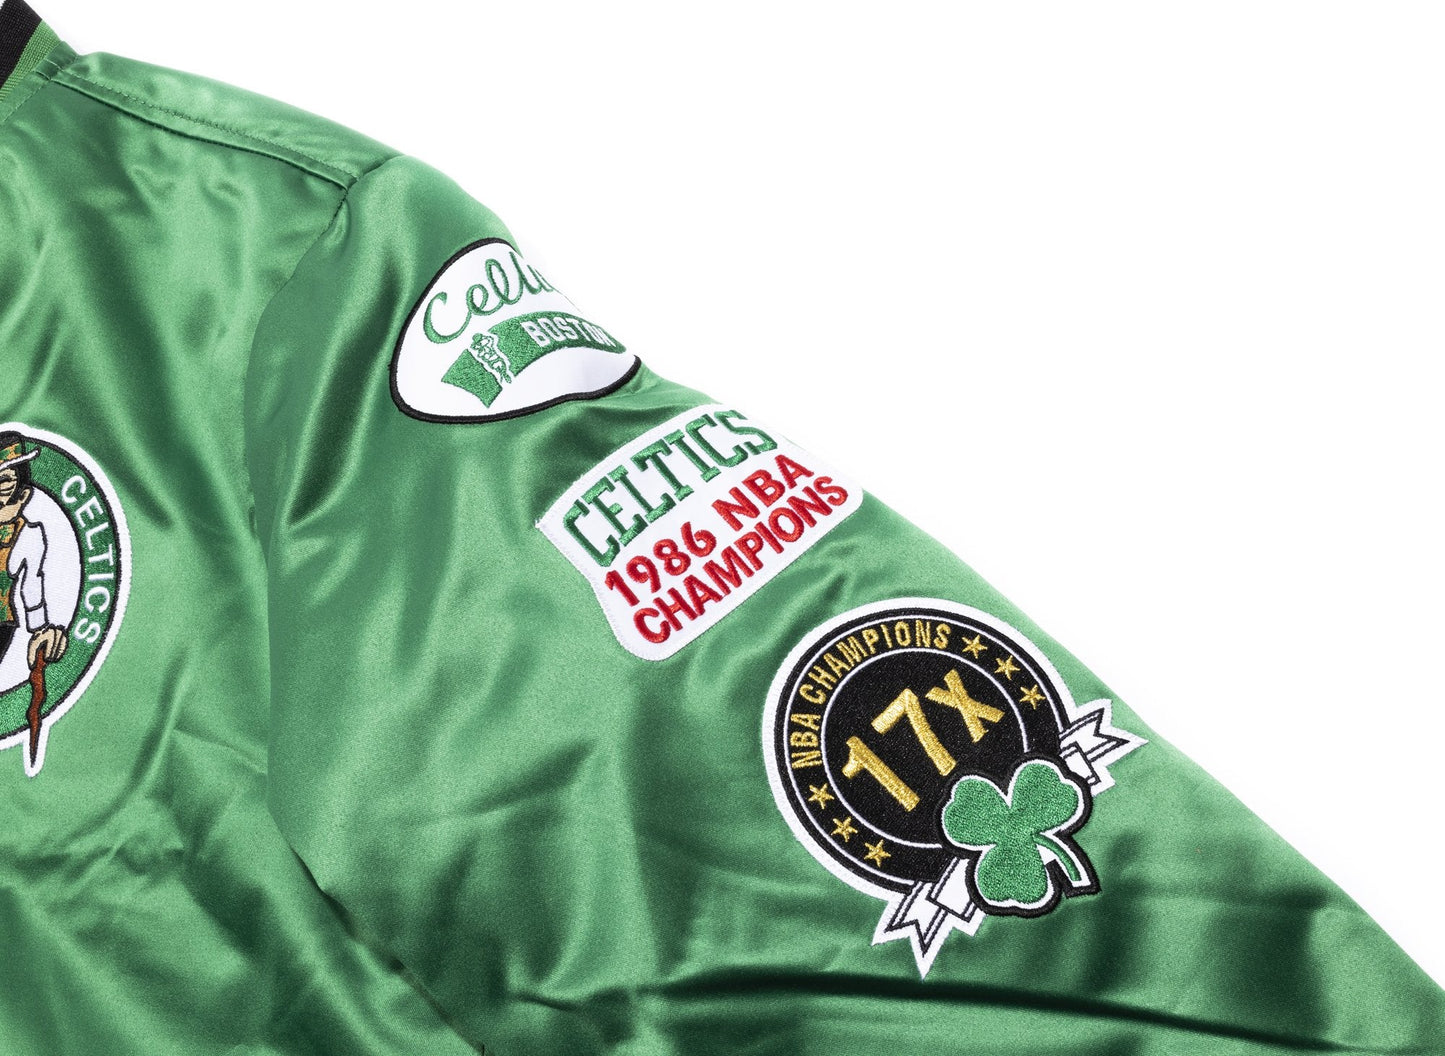 Mitchell & Ness NBA Champ City Satin Celtics Jacket